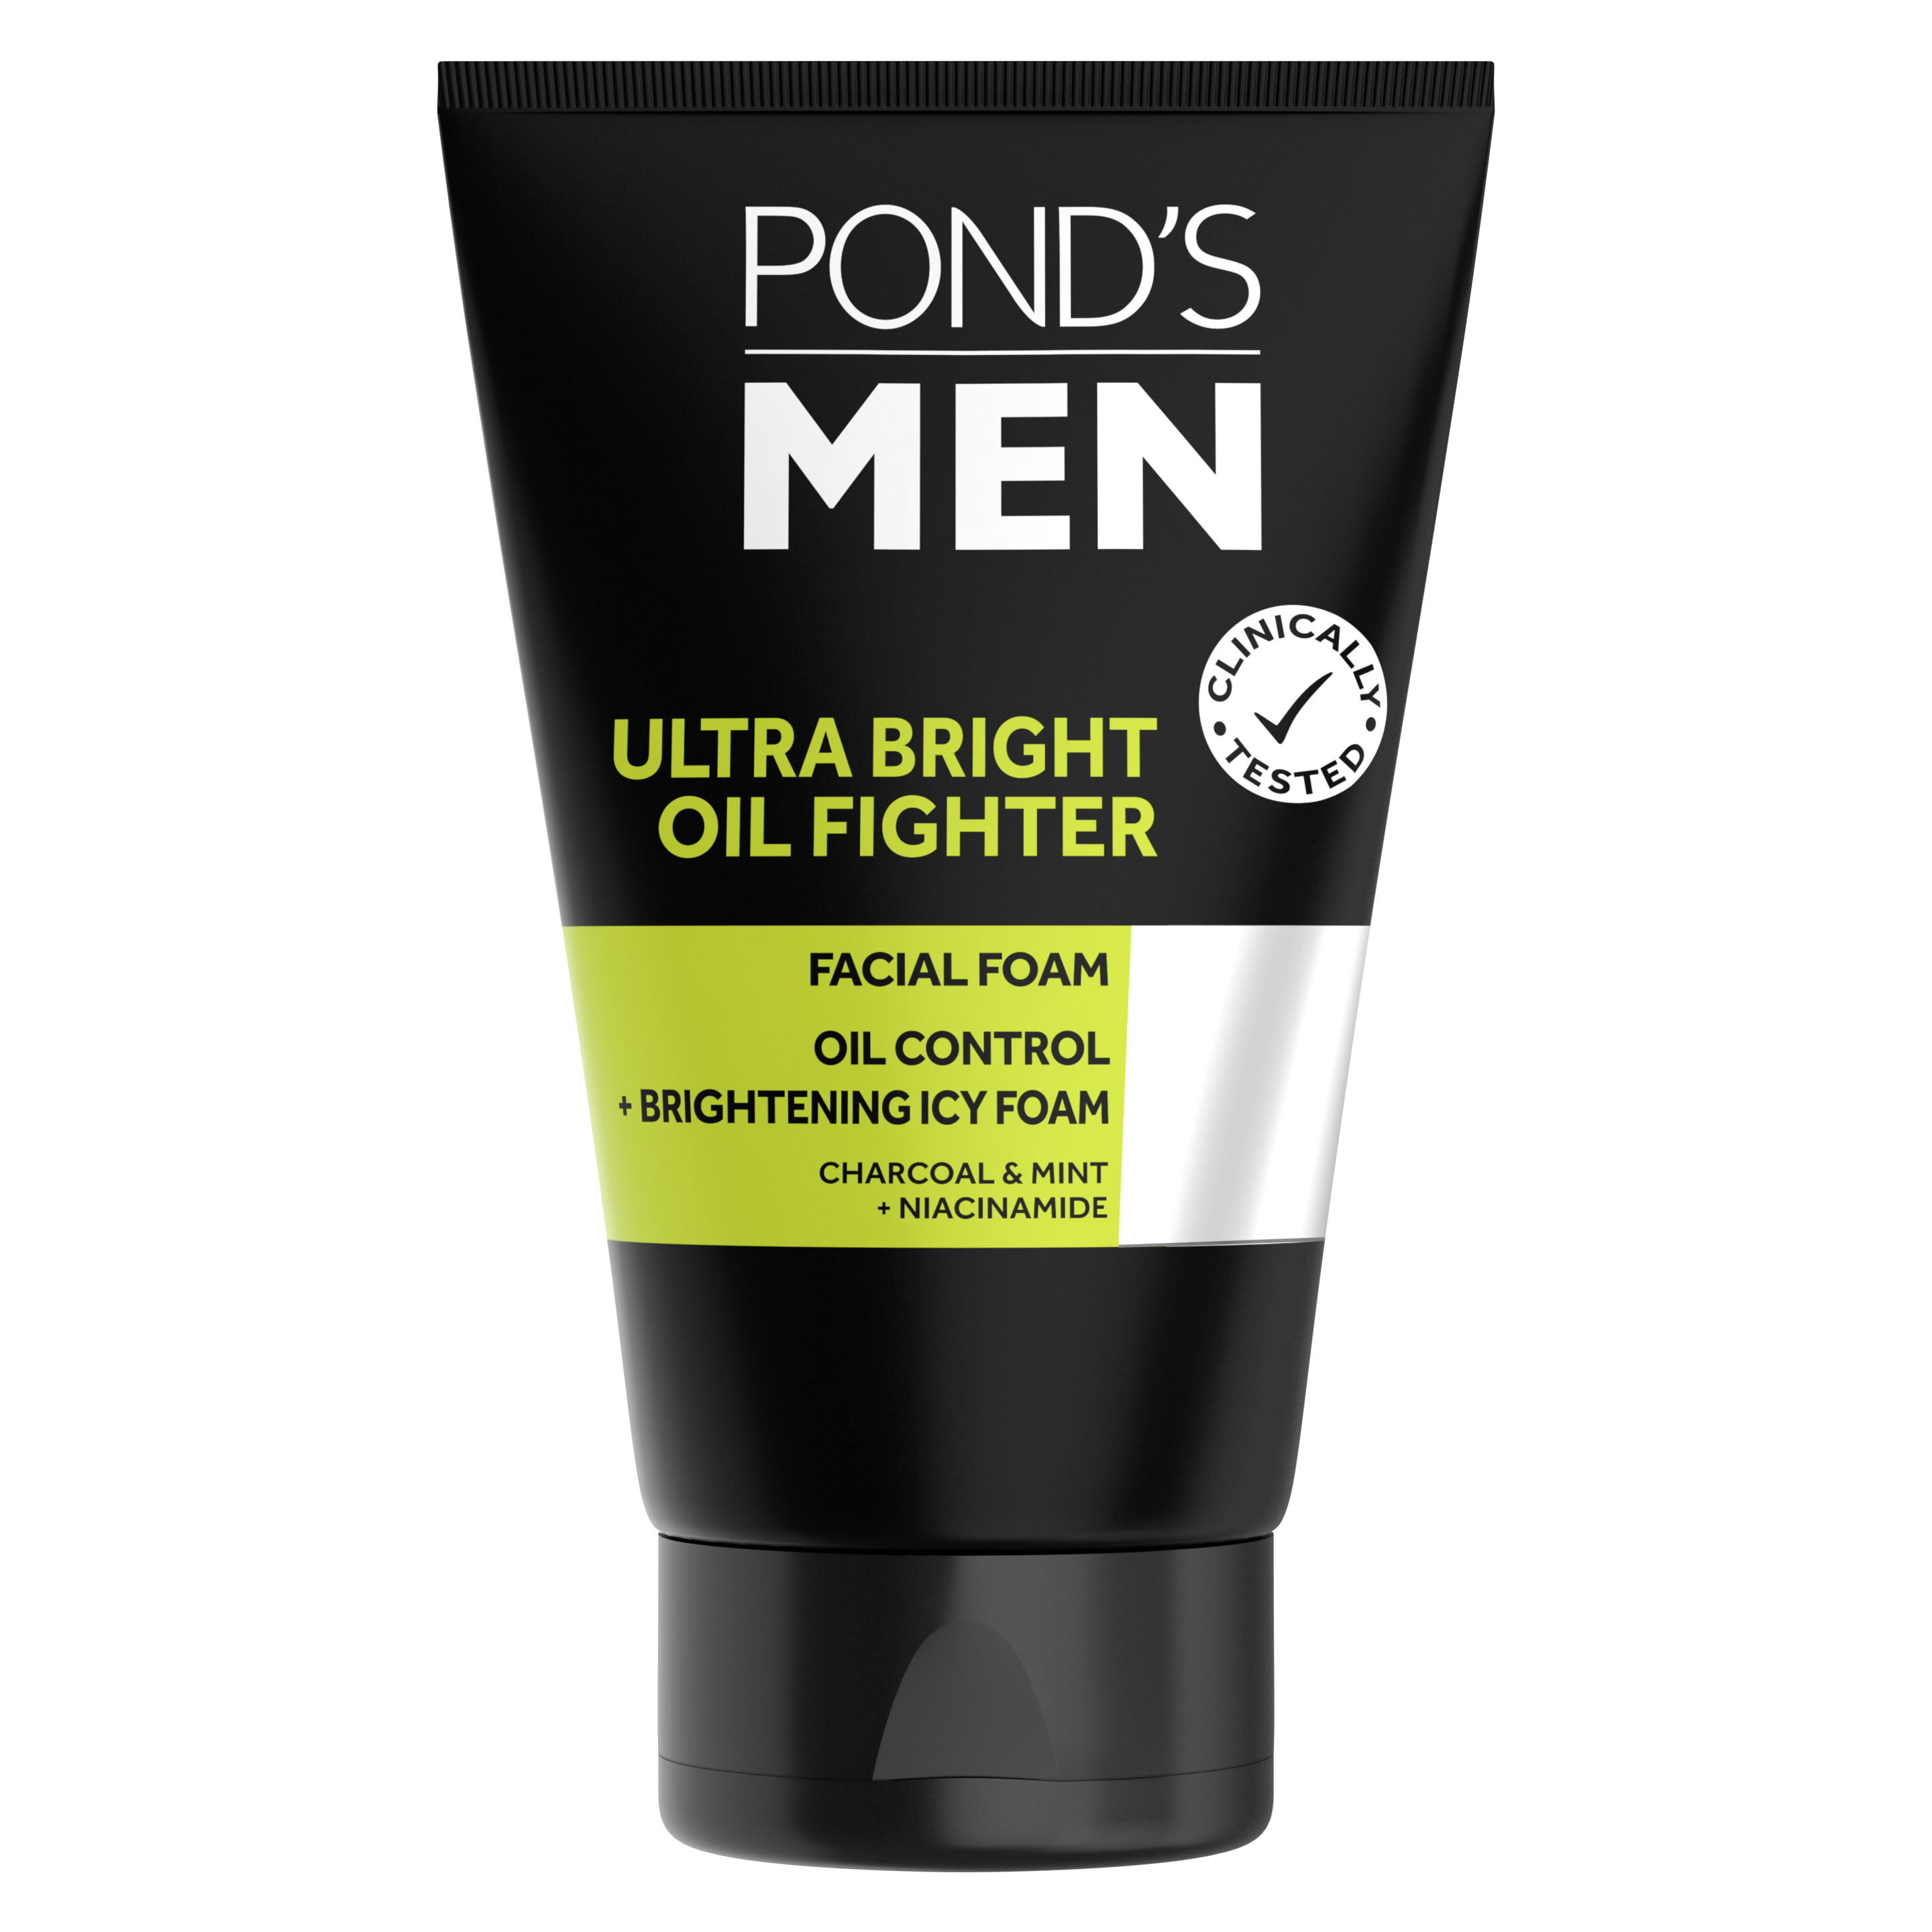 Pond's Men Ultra Bright Oil Fighter Facial Foam